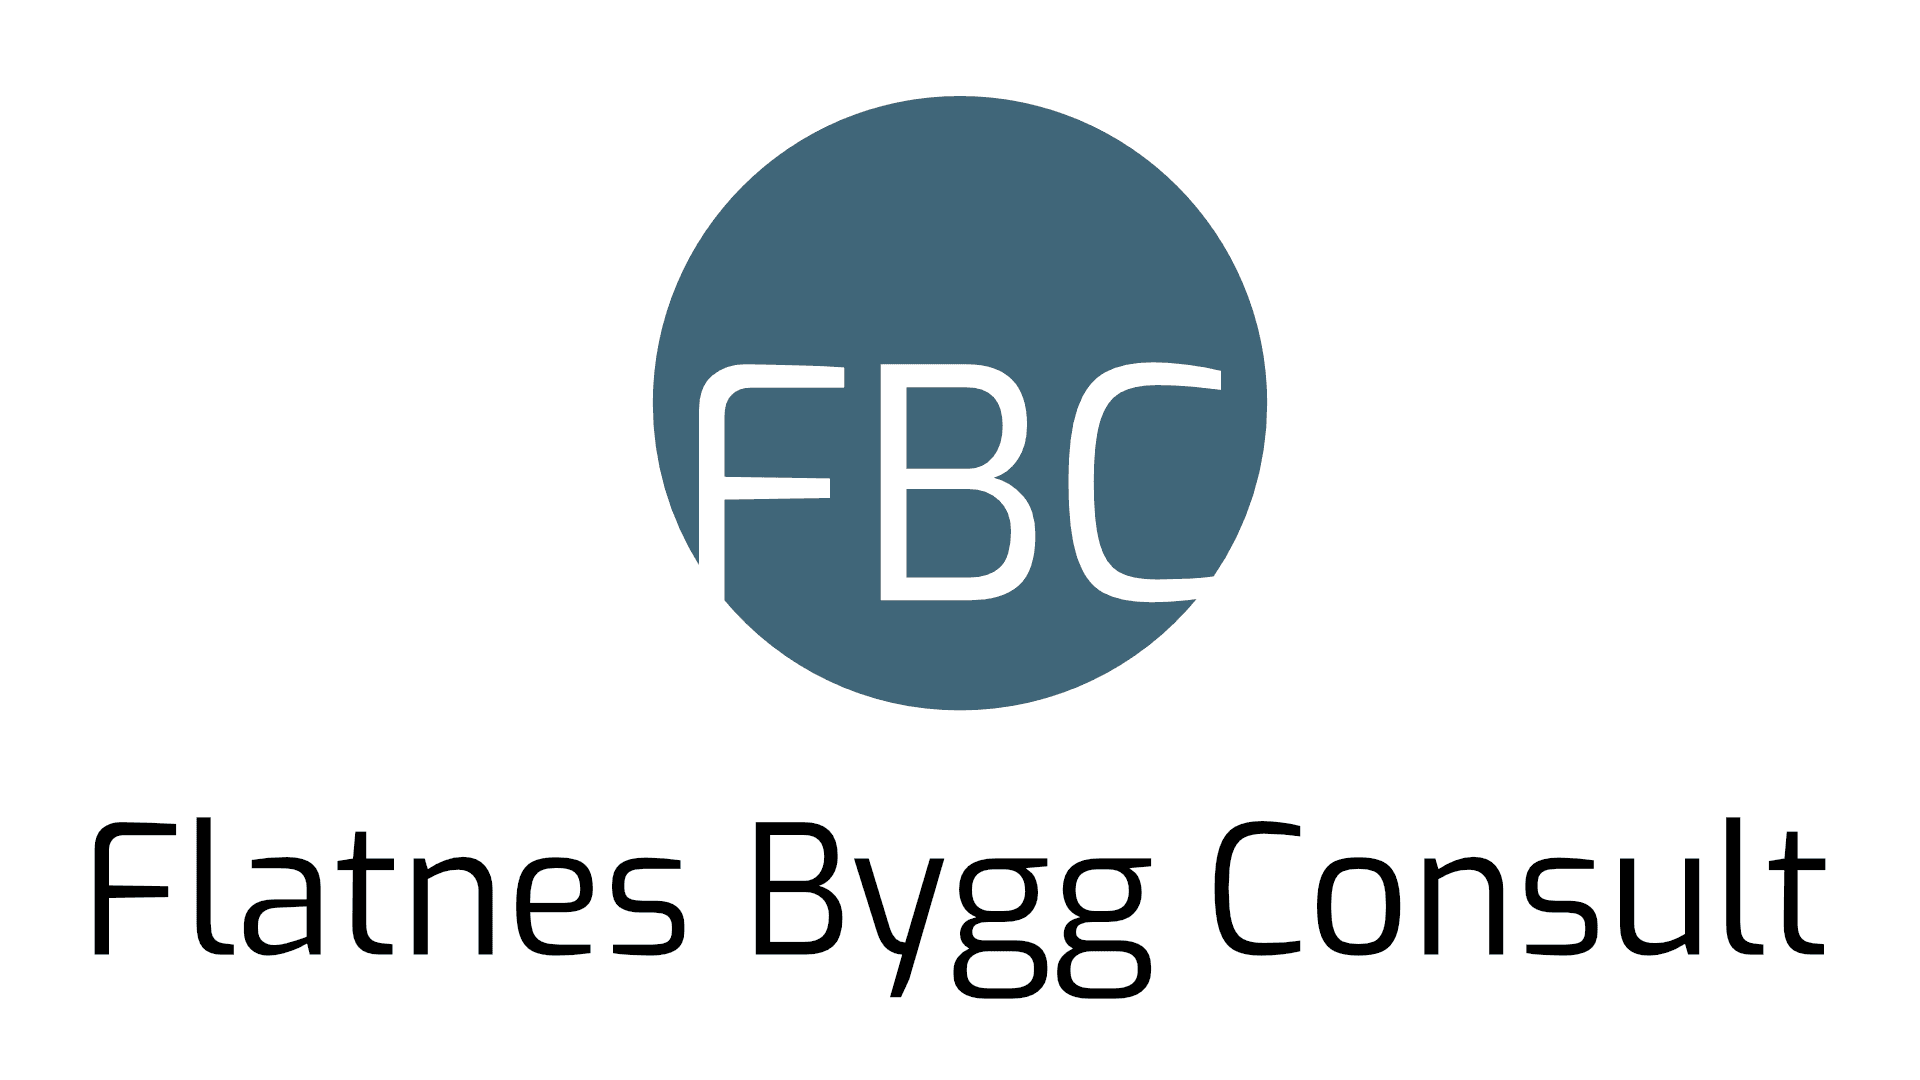 Om FBC - Flatnes Bygg Consult